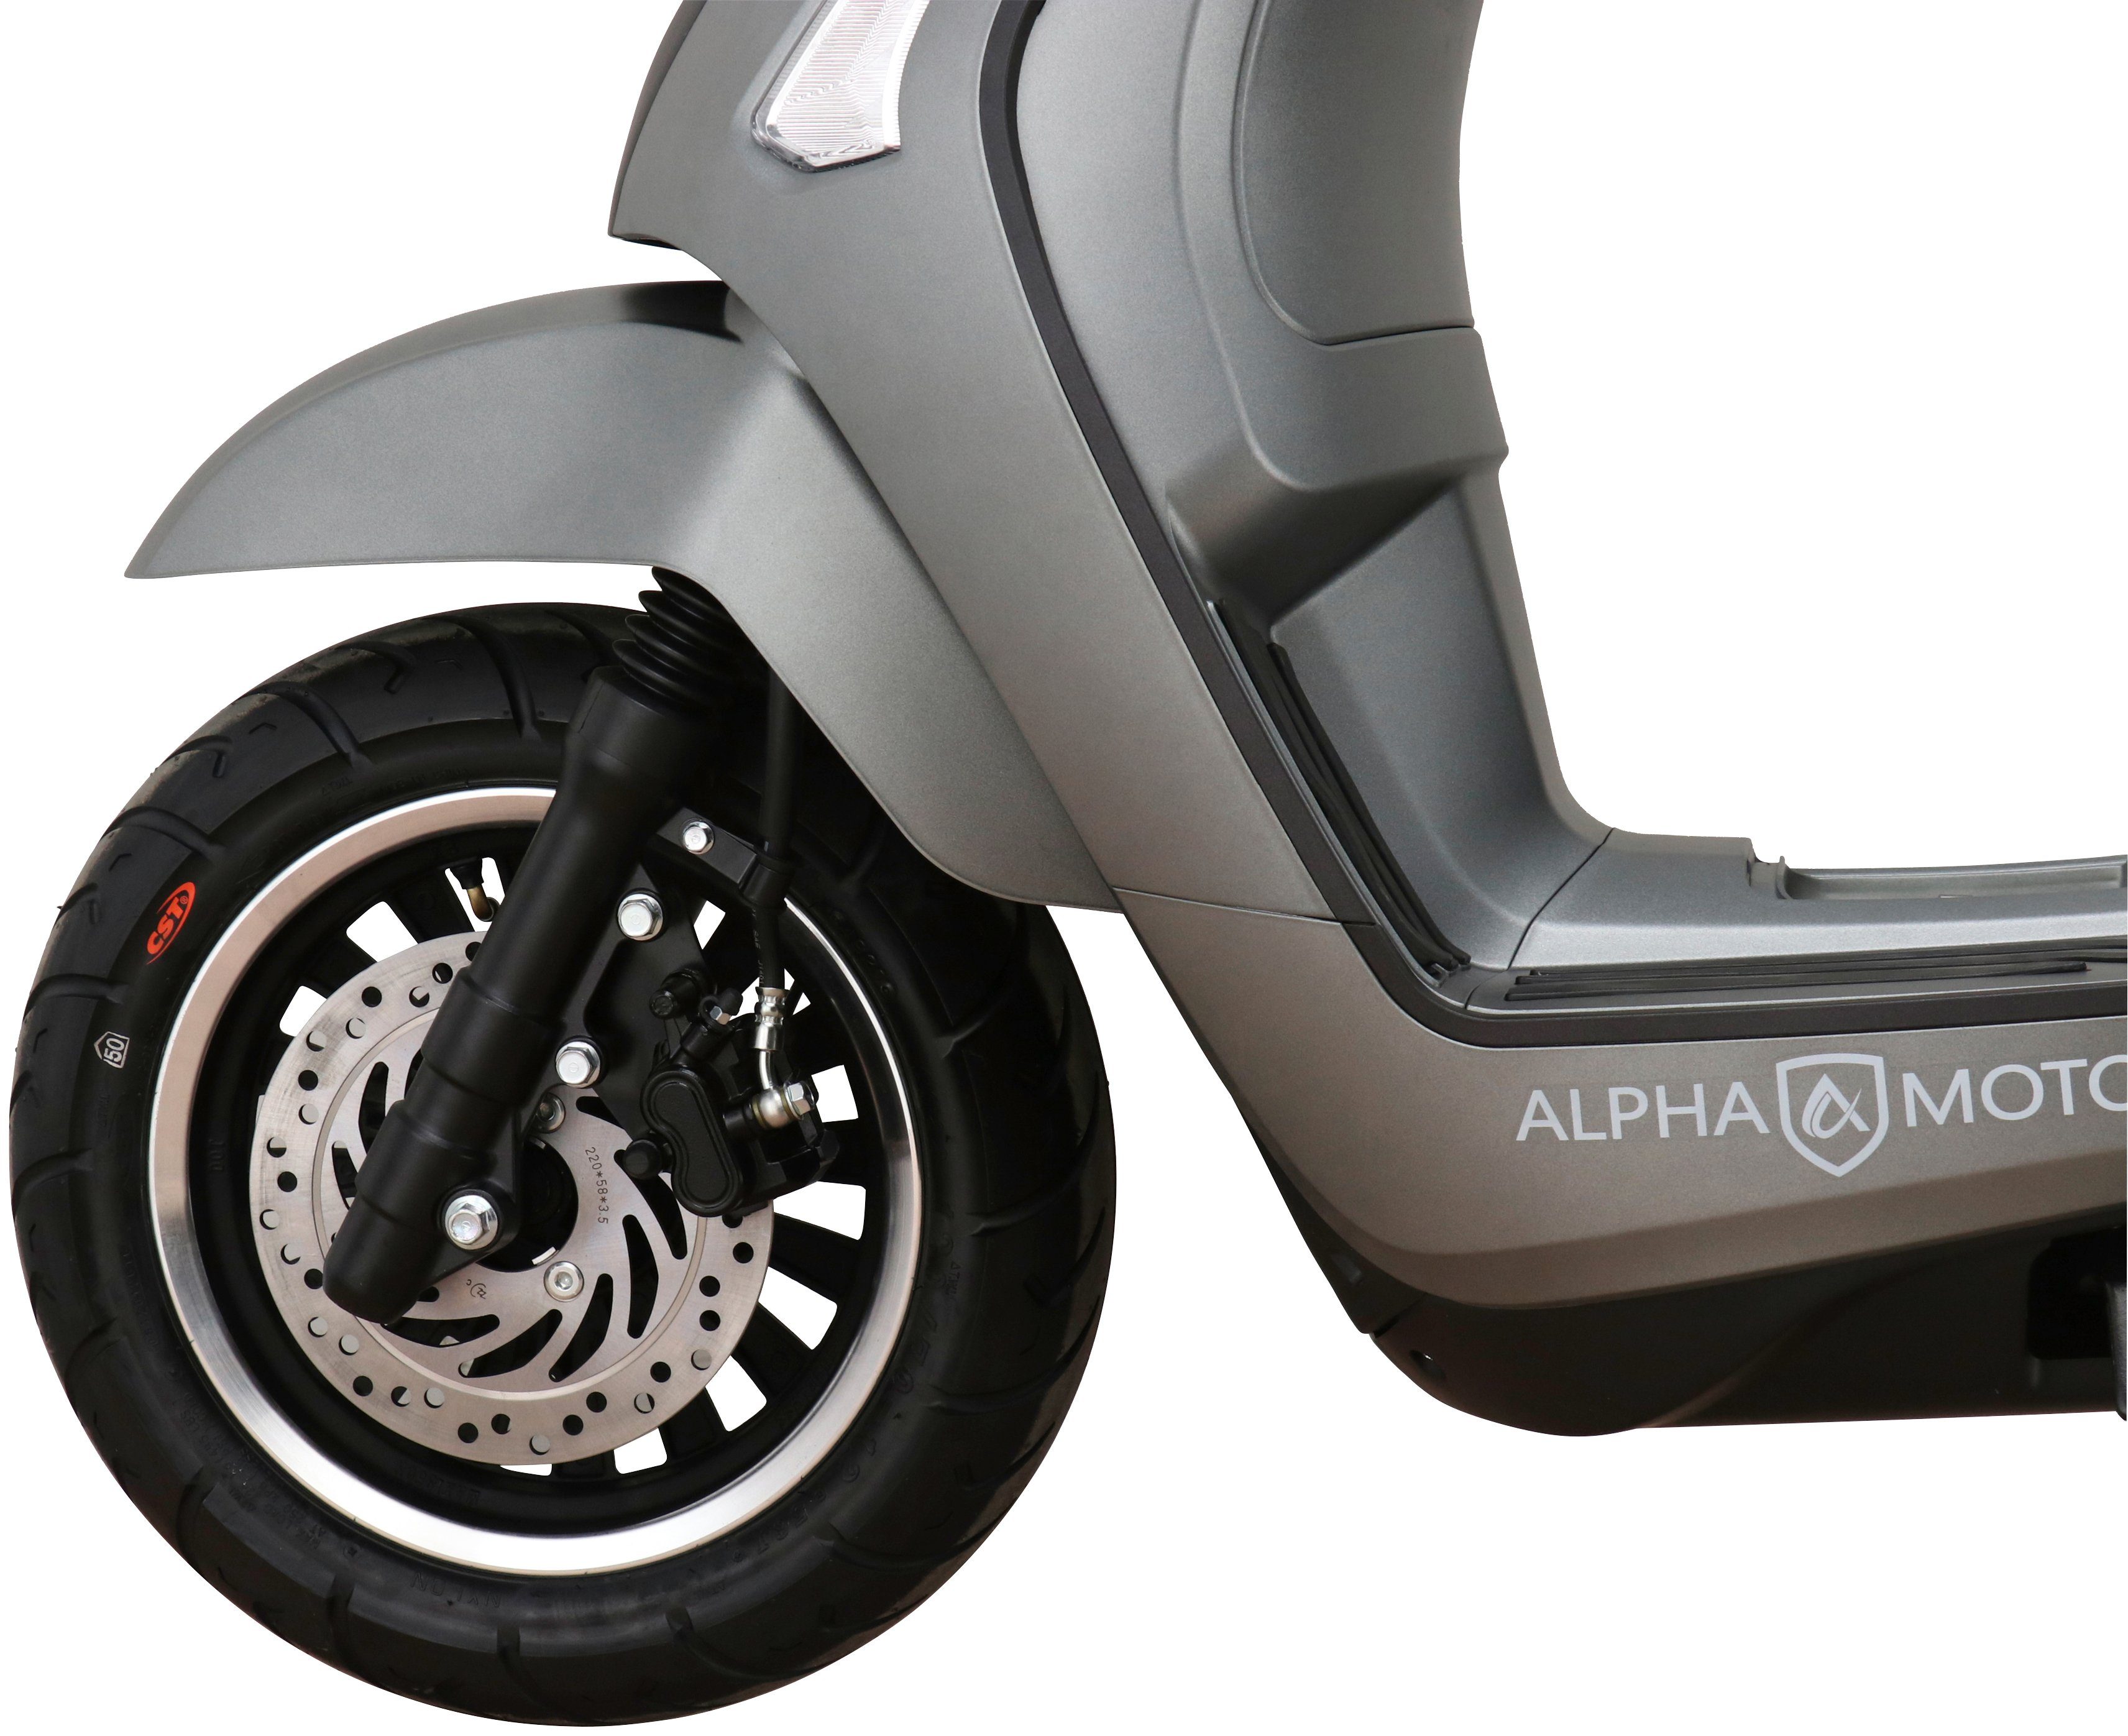 Alpha Motors Motorroller Euro 5 Vita, km/h, 85 125 ccm